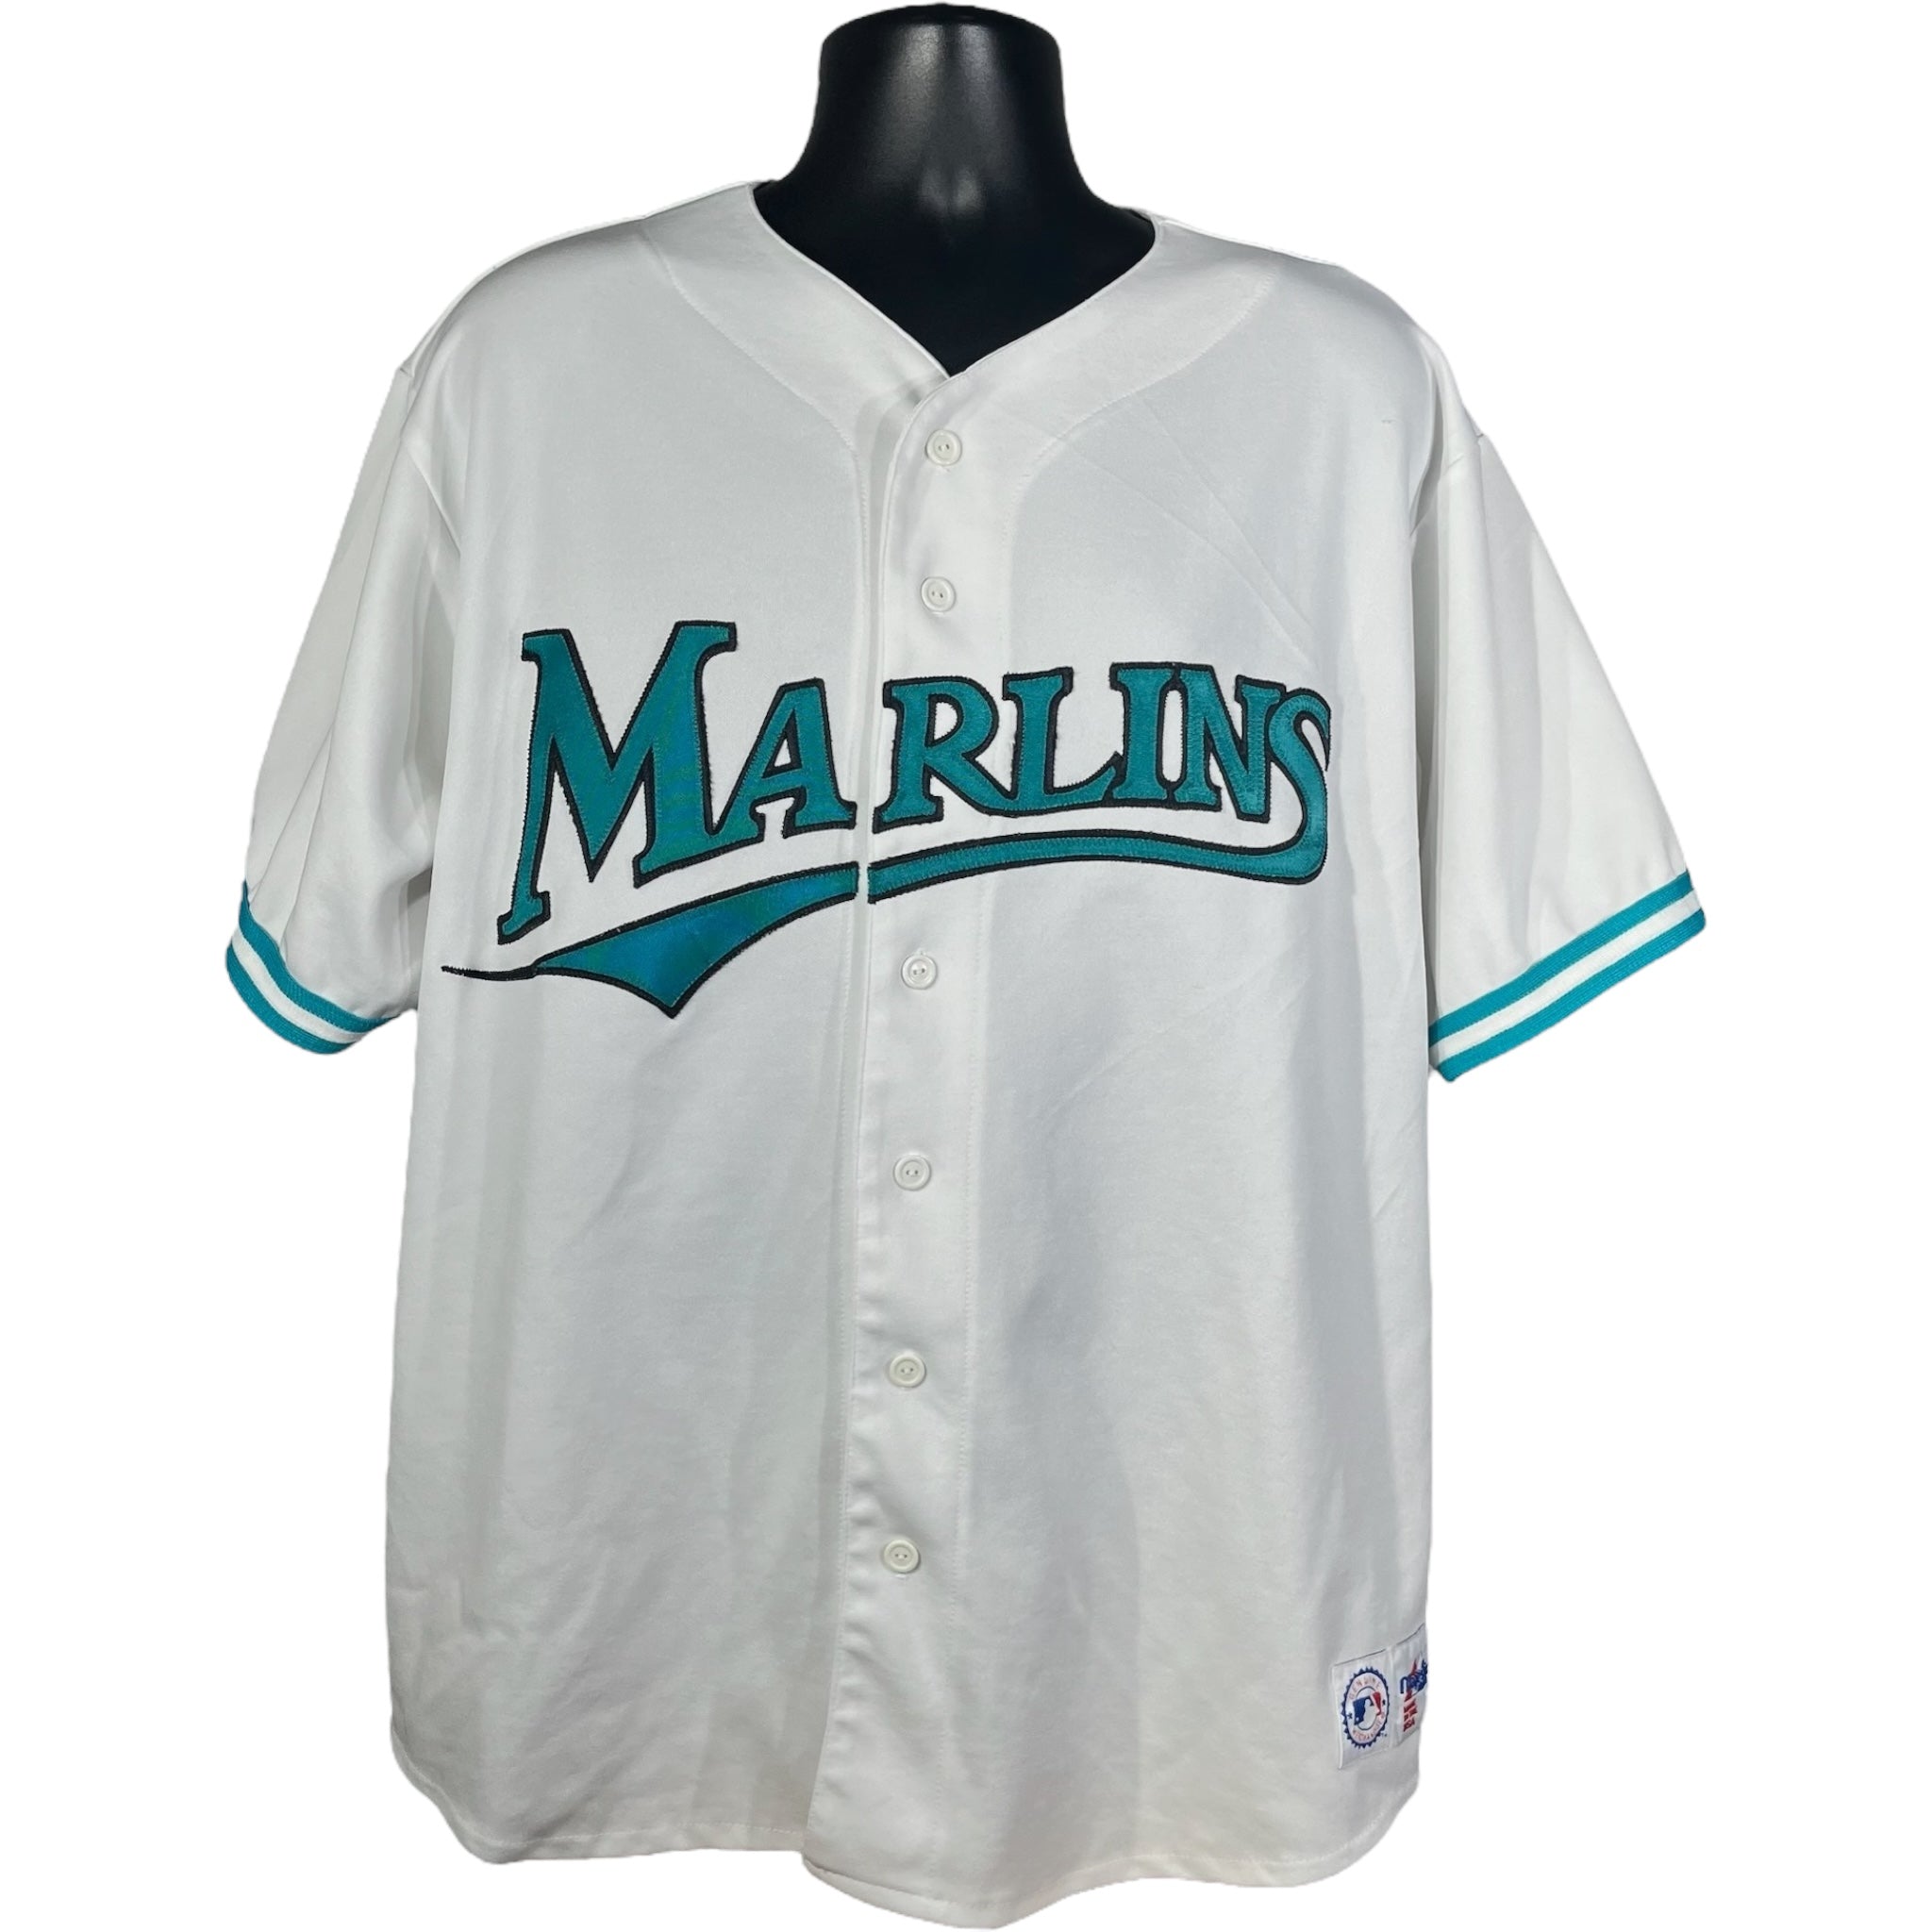 Vintage Miami Marlins Baseball Majestic Jersey 1990s